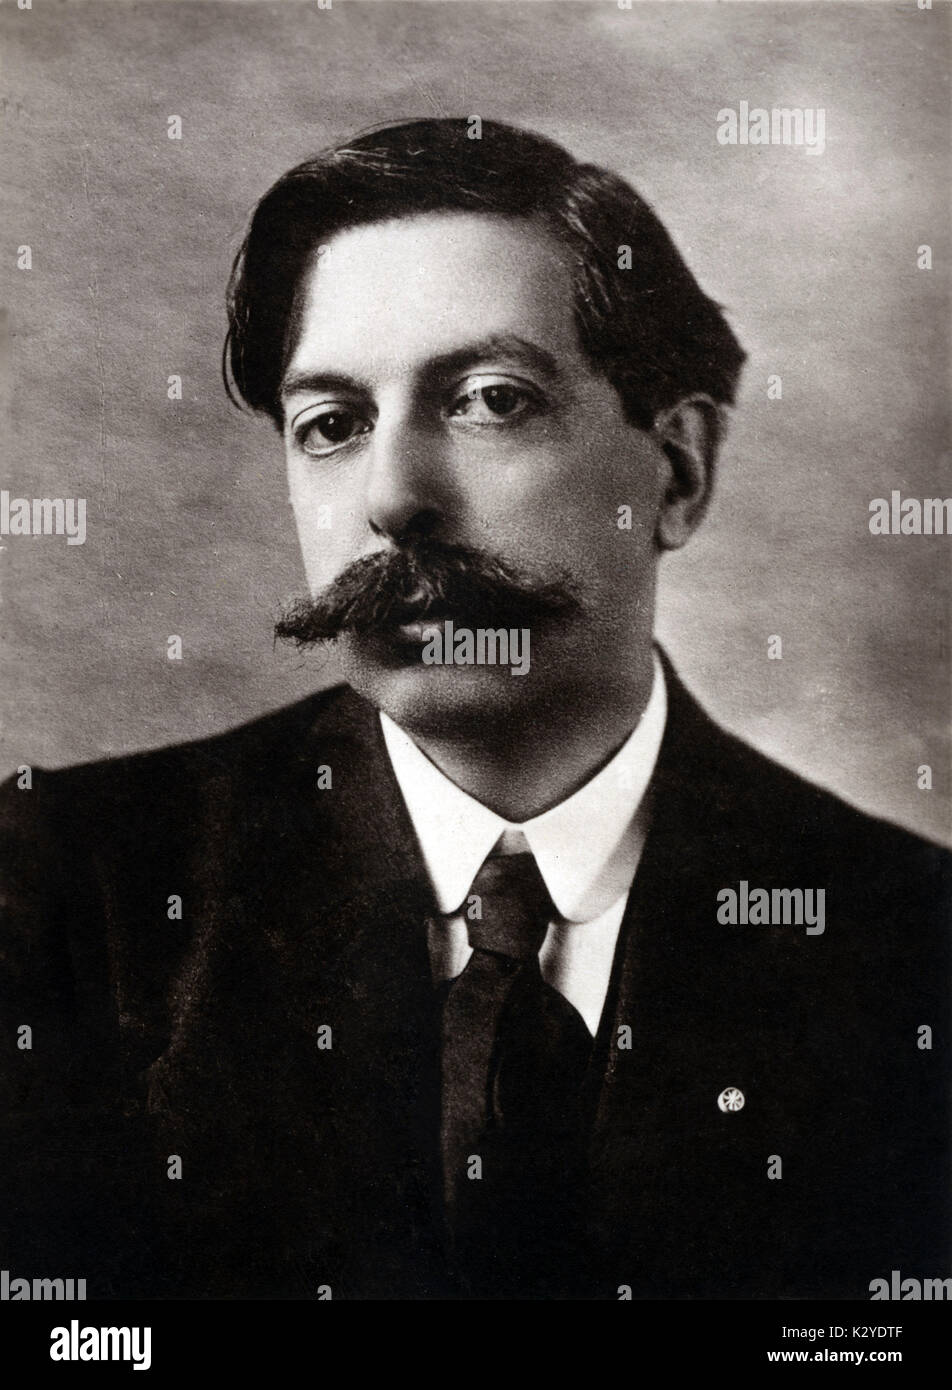 Enrique GRANADOS portrait Spanish composer, 1867-1916 Stock Photo